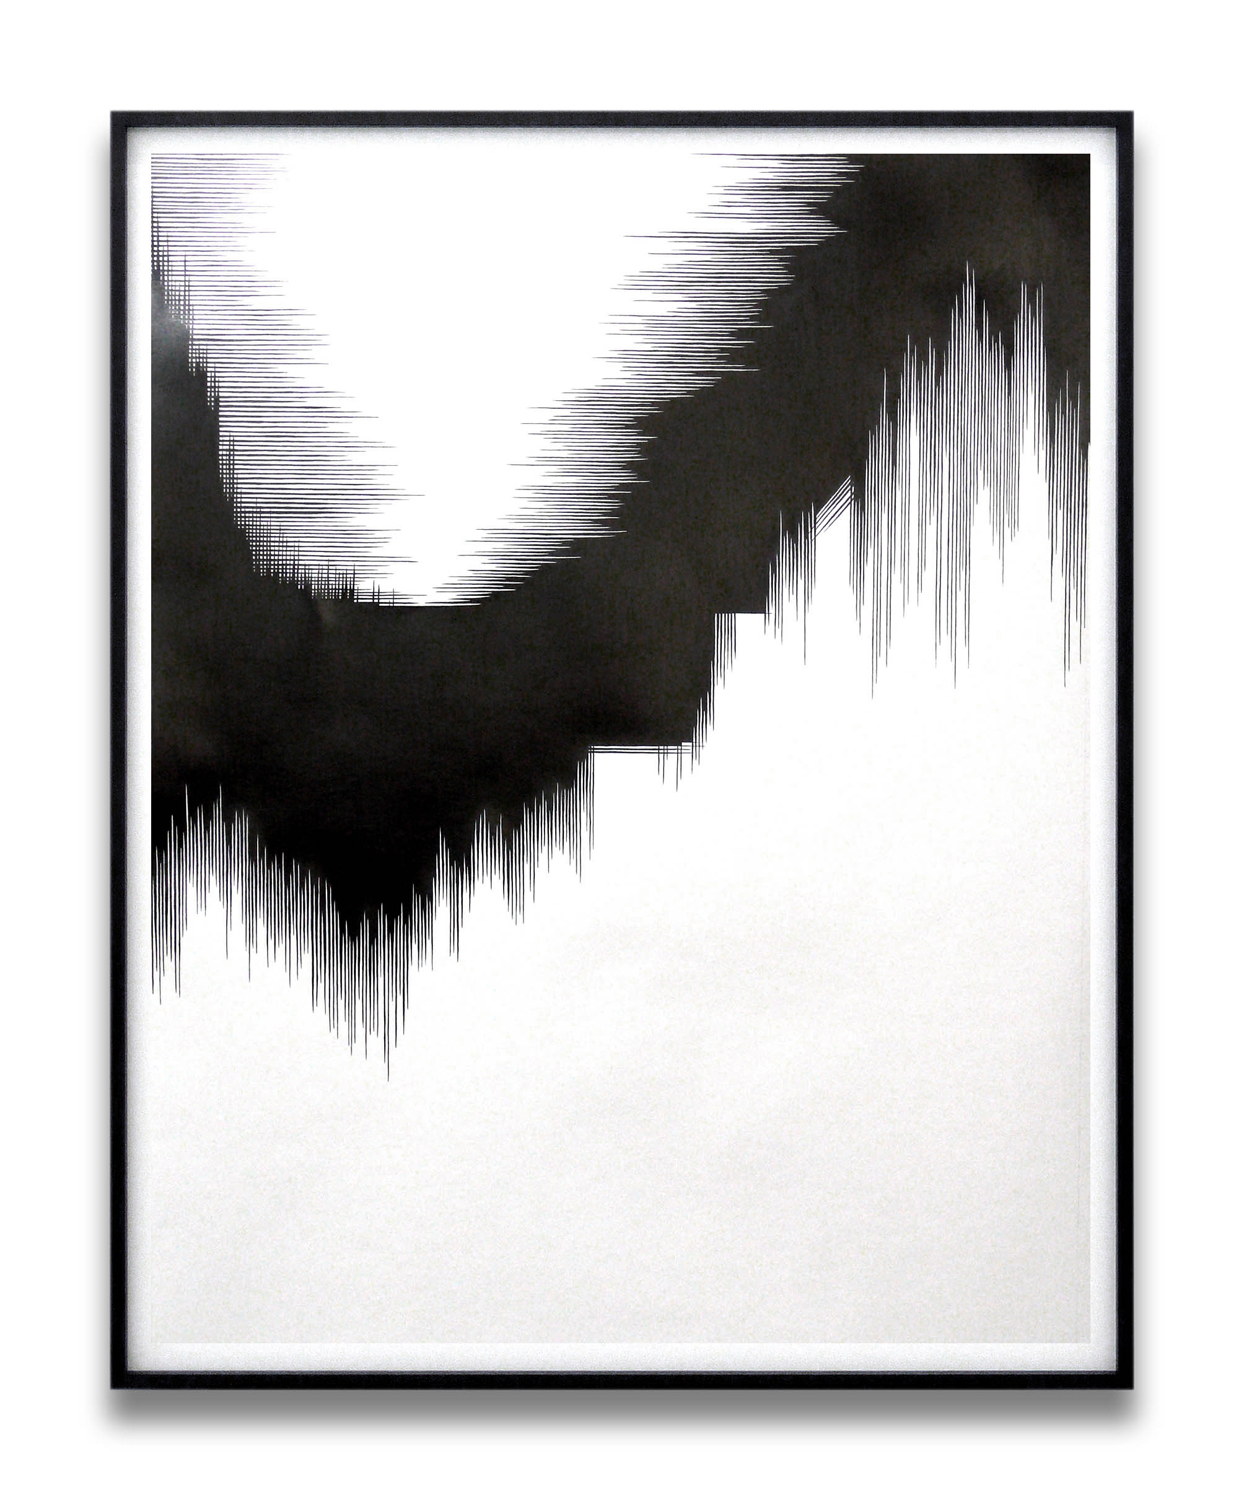   draft V, 2010, pencil on paper, 140 x 110cm  